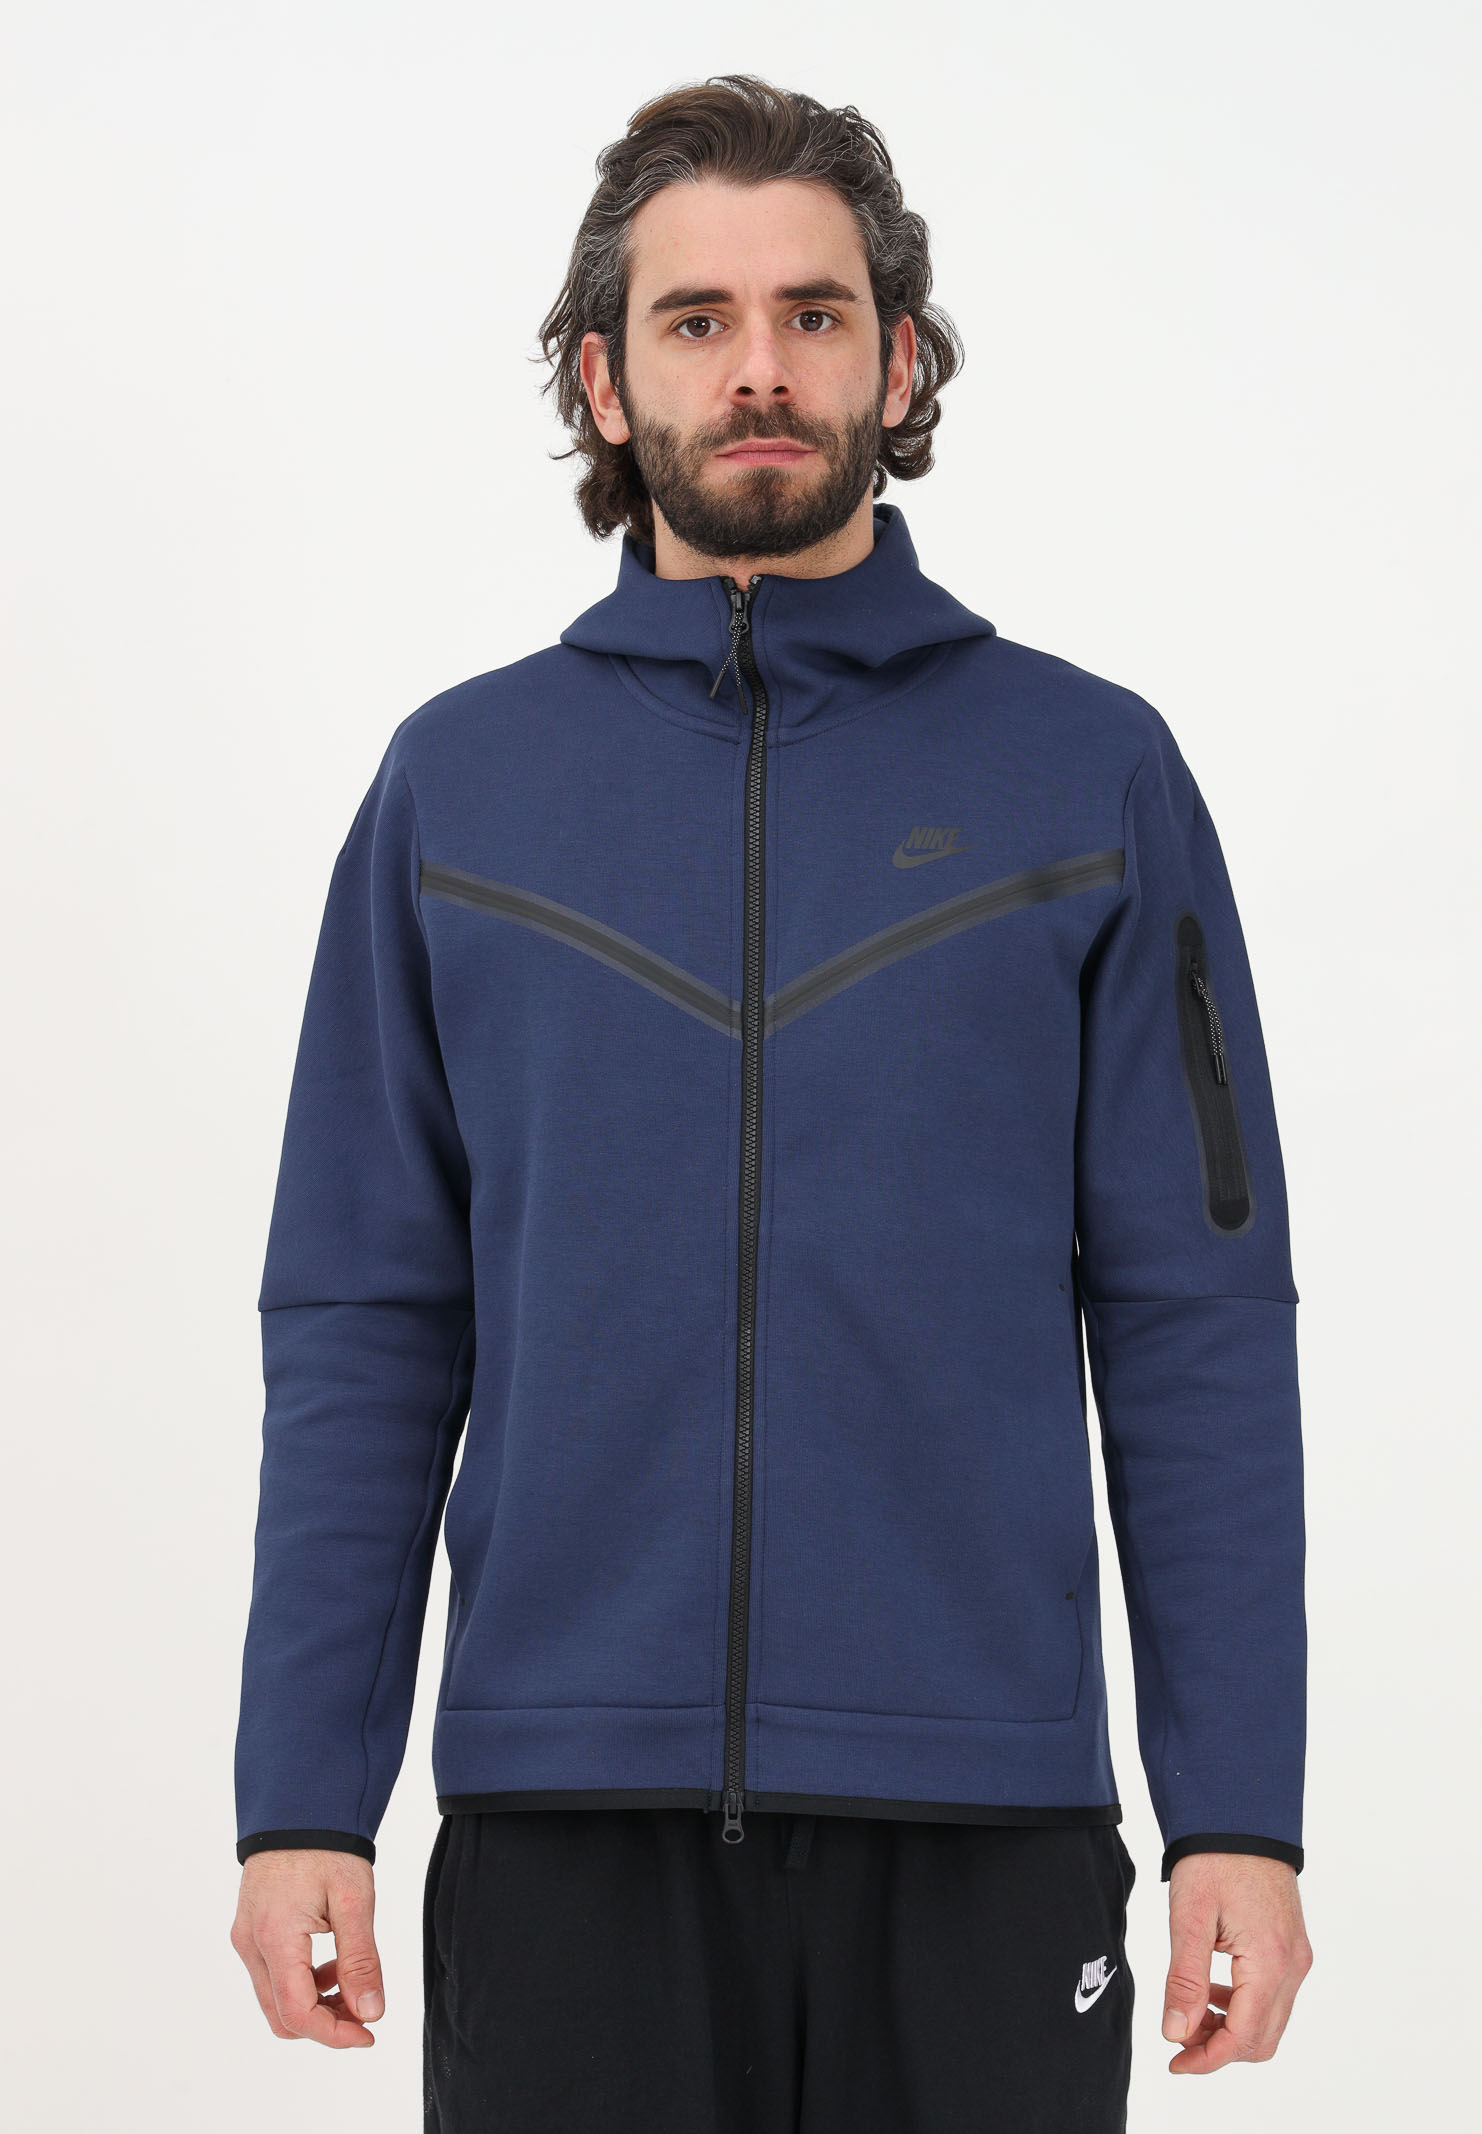 Blue men's sweatshirt with logo and zip NIKE | CU4489410